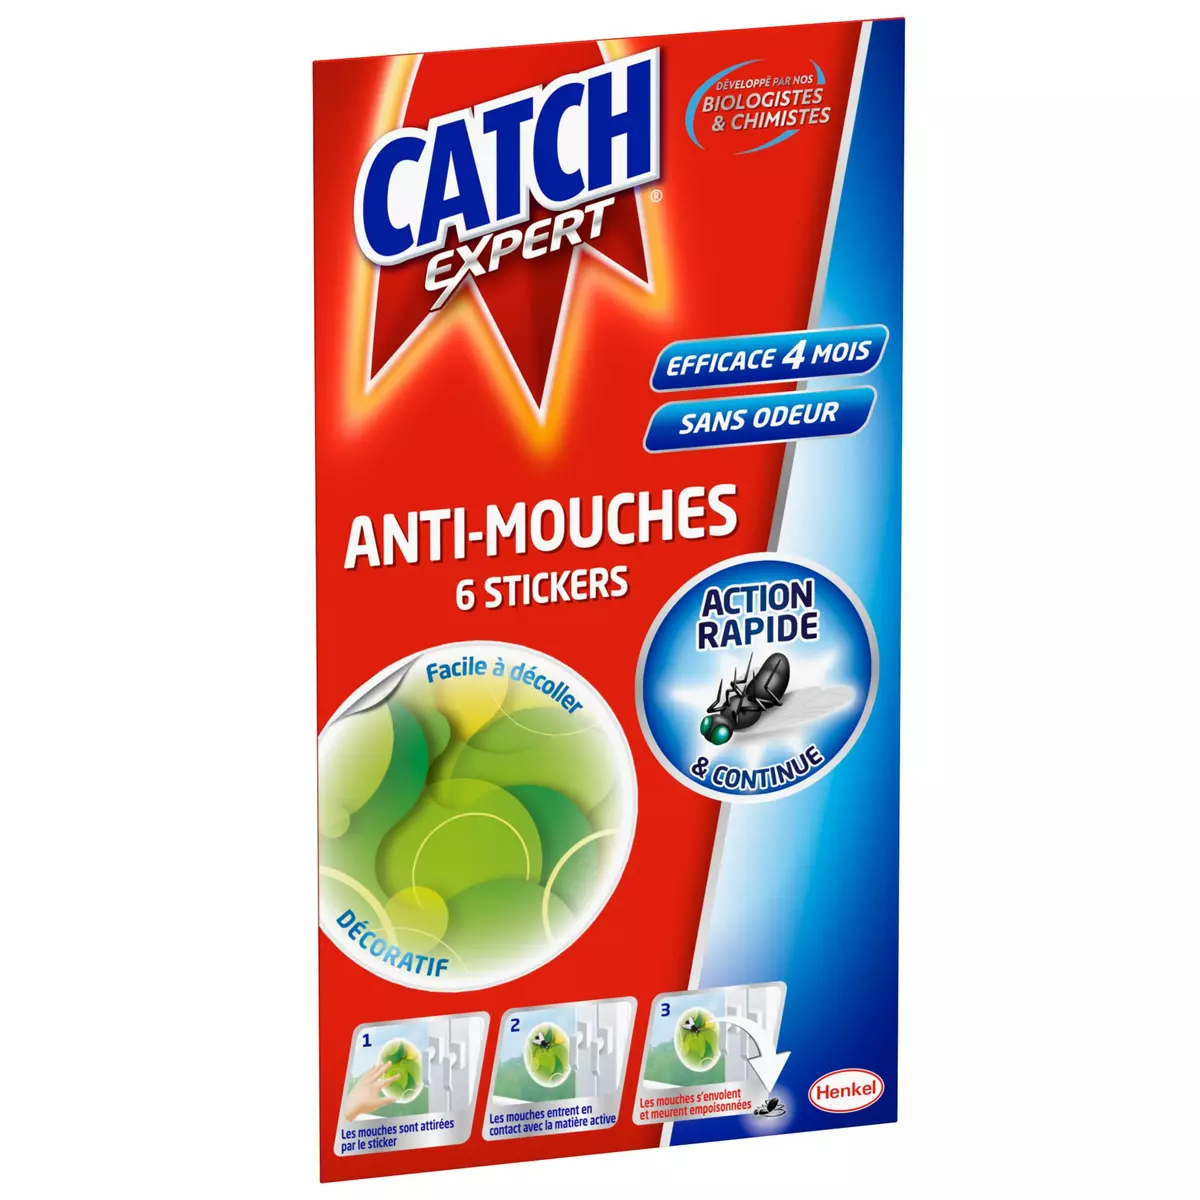 CATCH Stickers anti-mouches facile à décoller 6 stickers